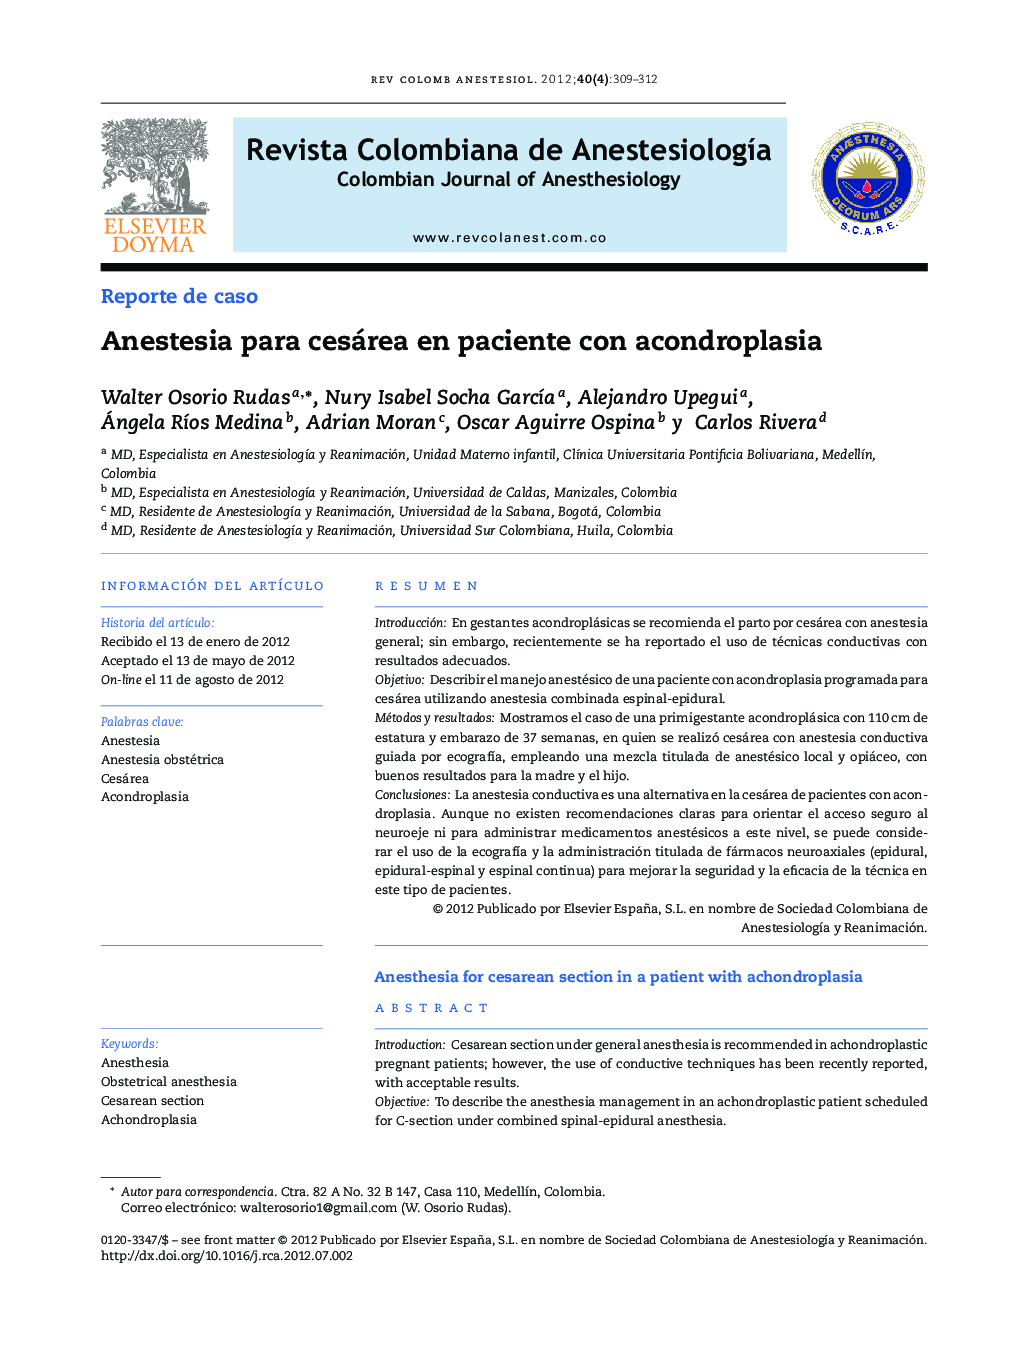 Anestesia para cesárea en paciente con acondroplasia